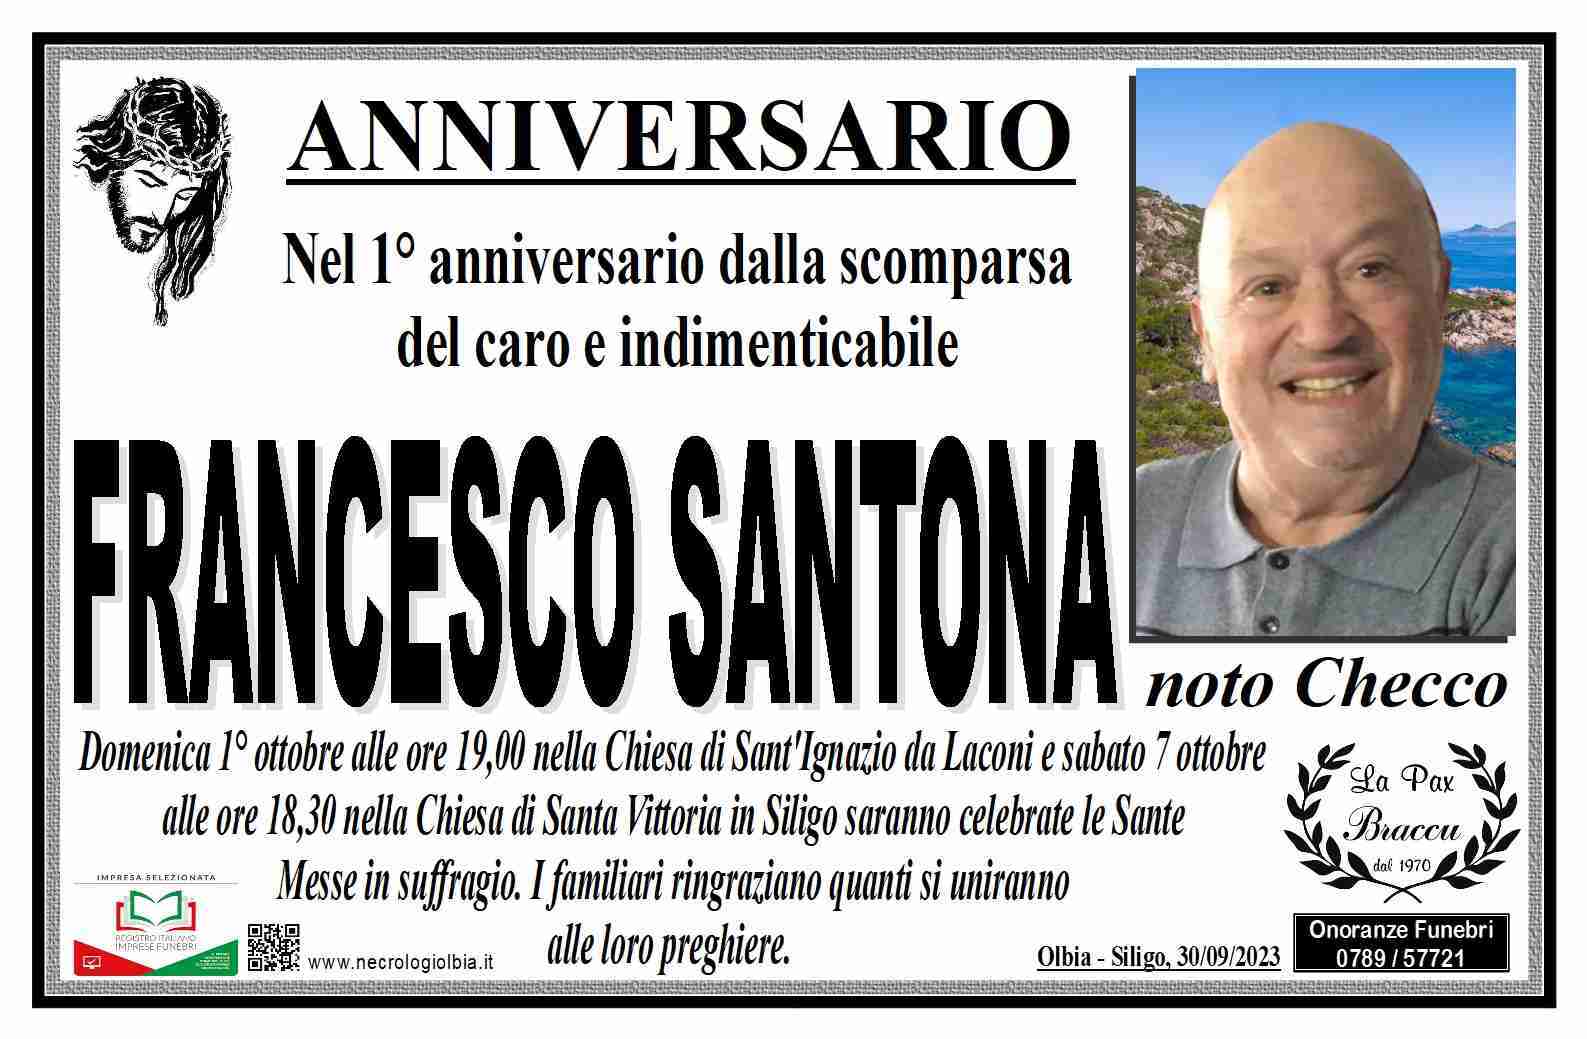 Francesco Santona